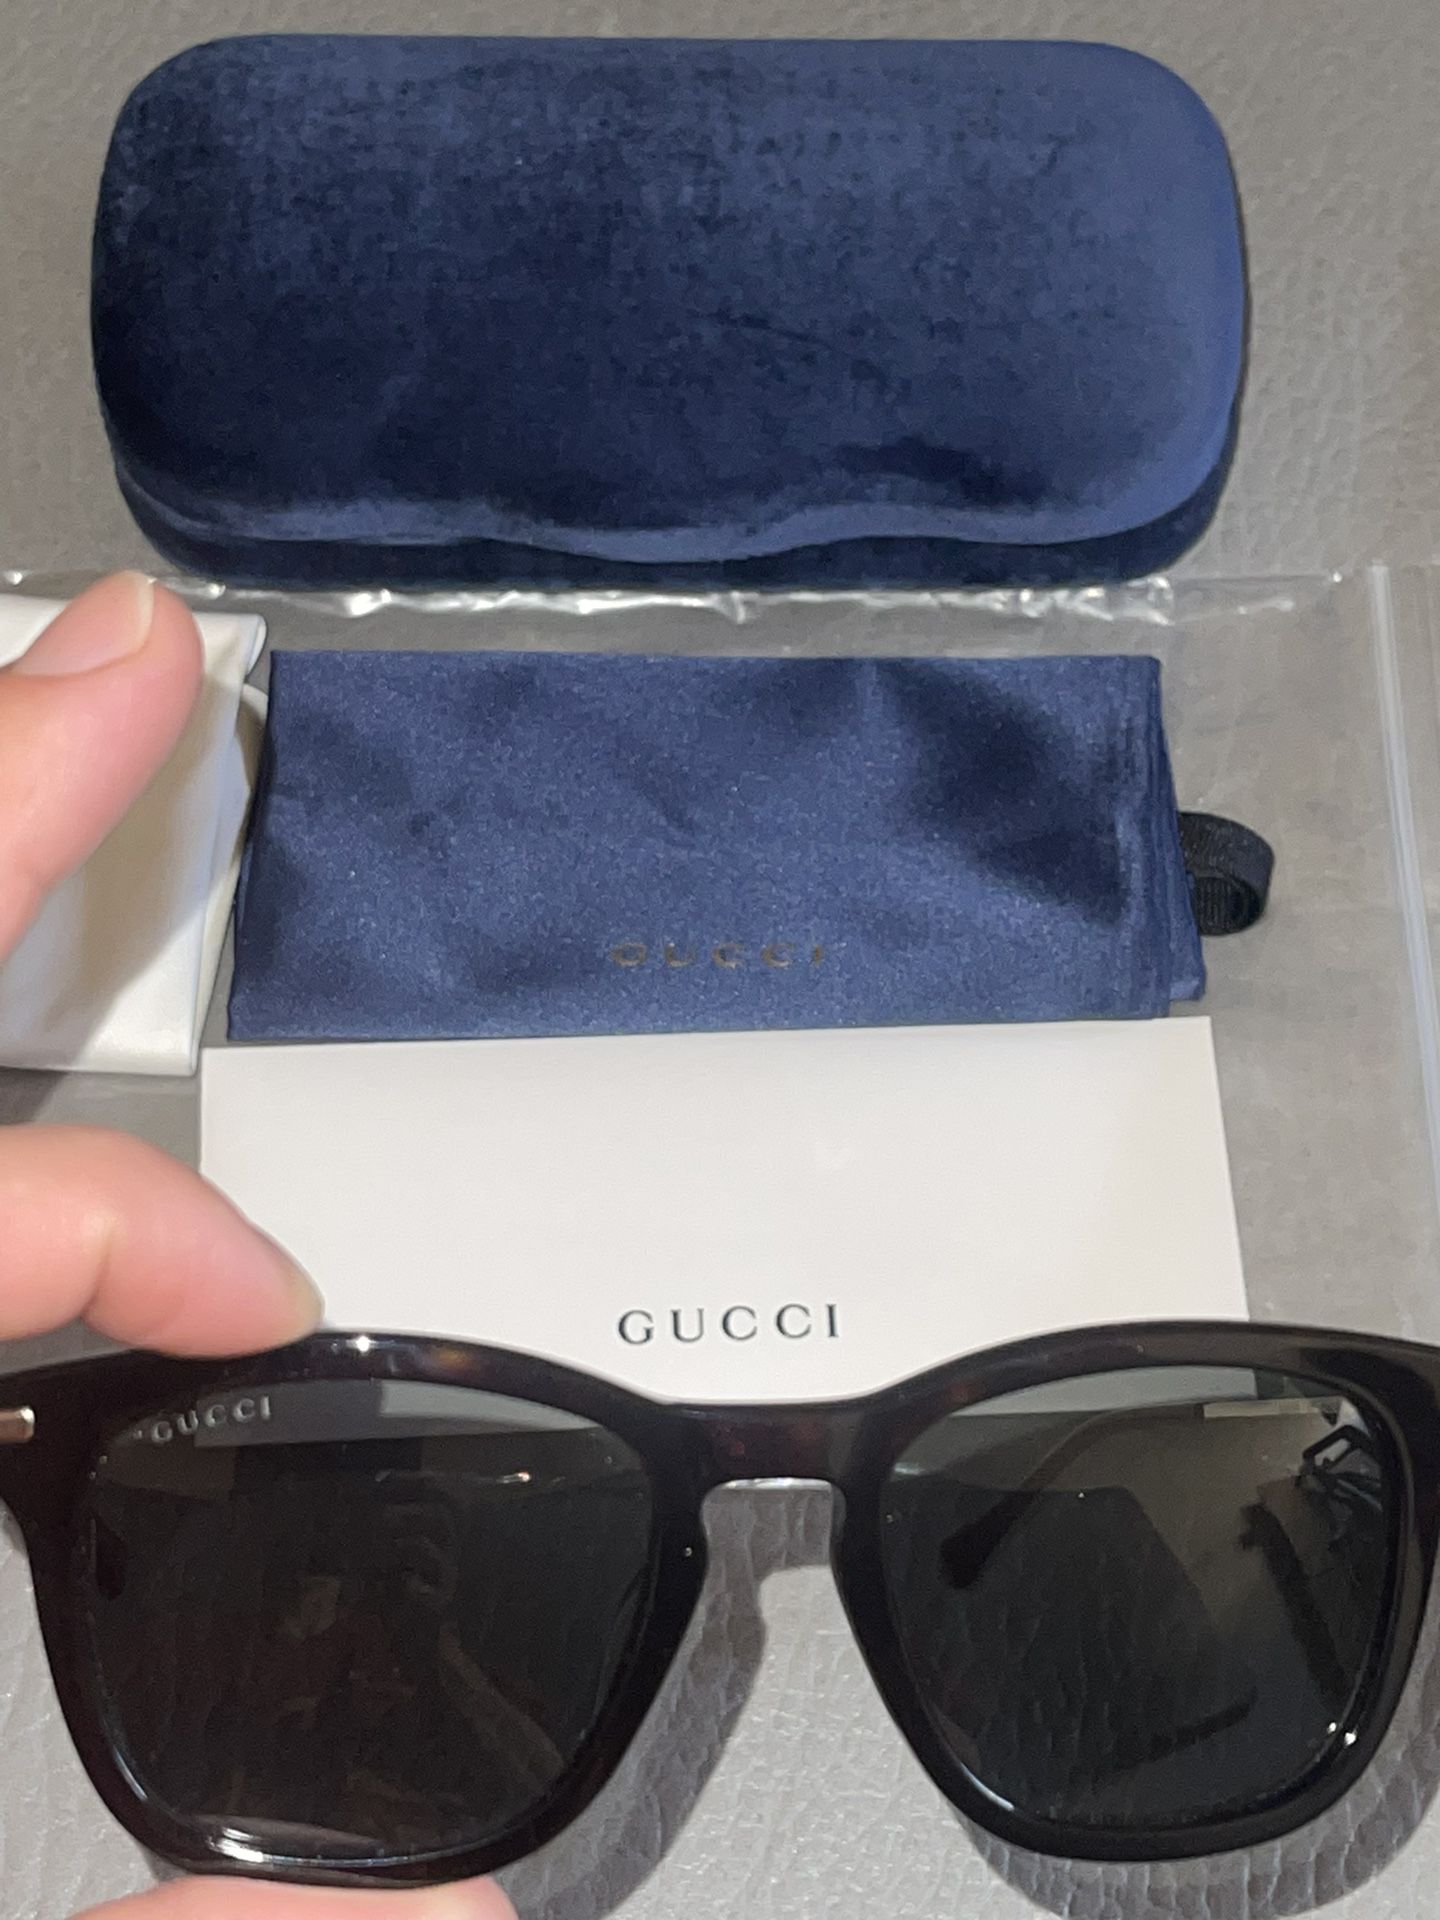 Gucci Mens Glasses Brand New